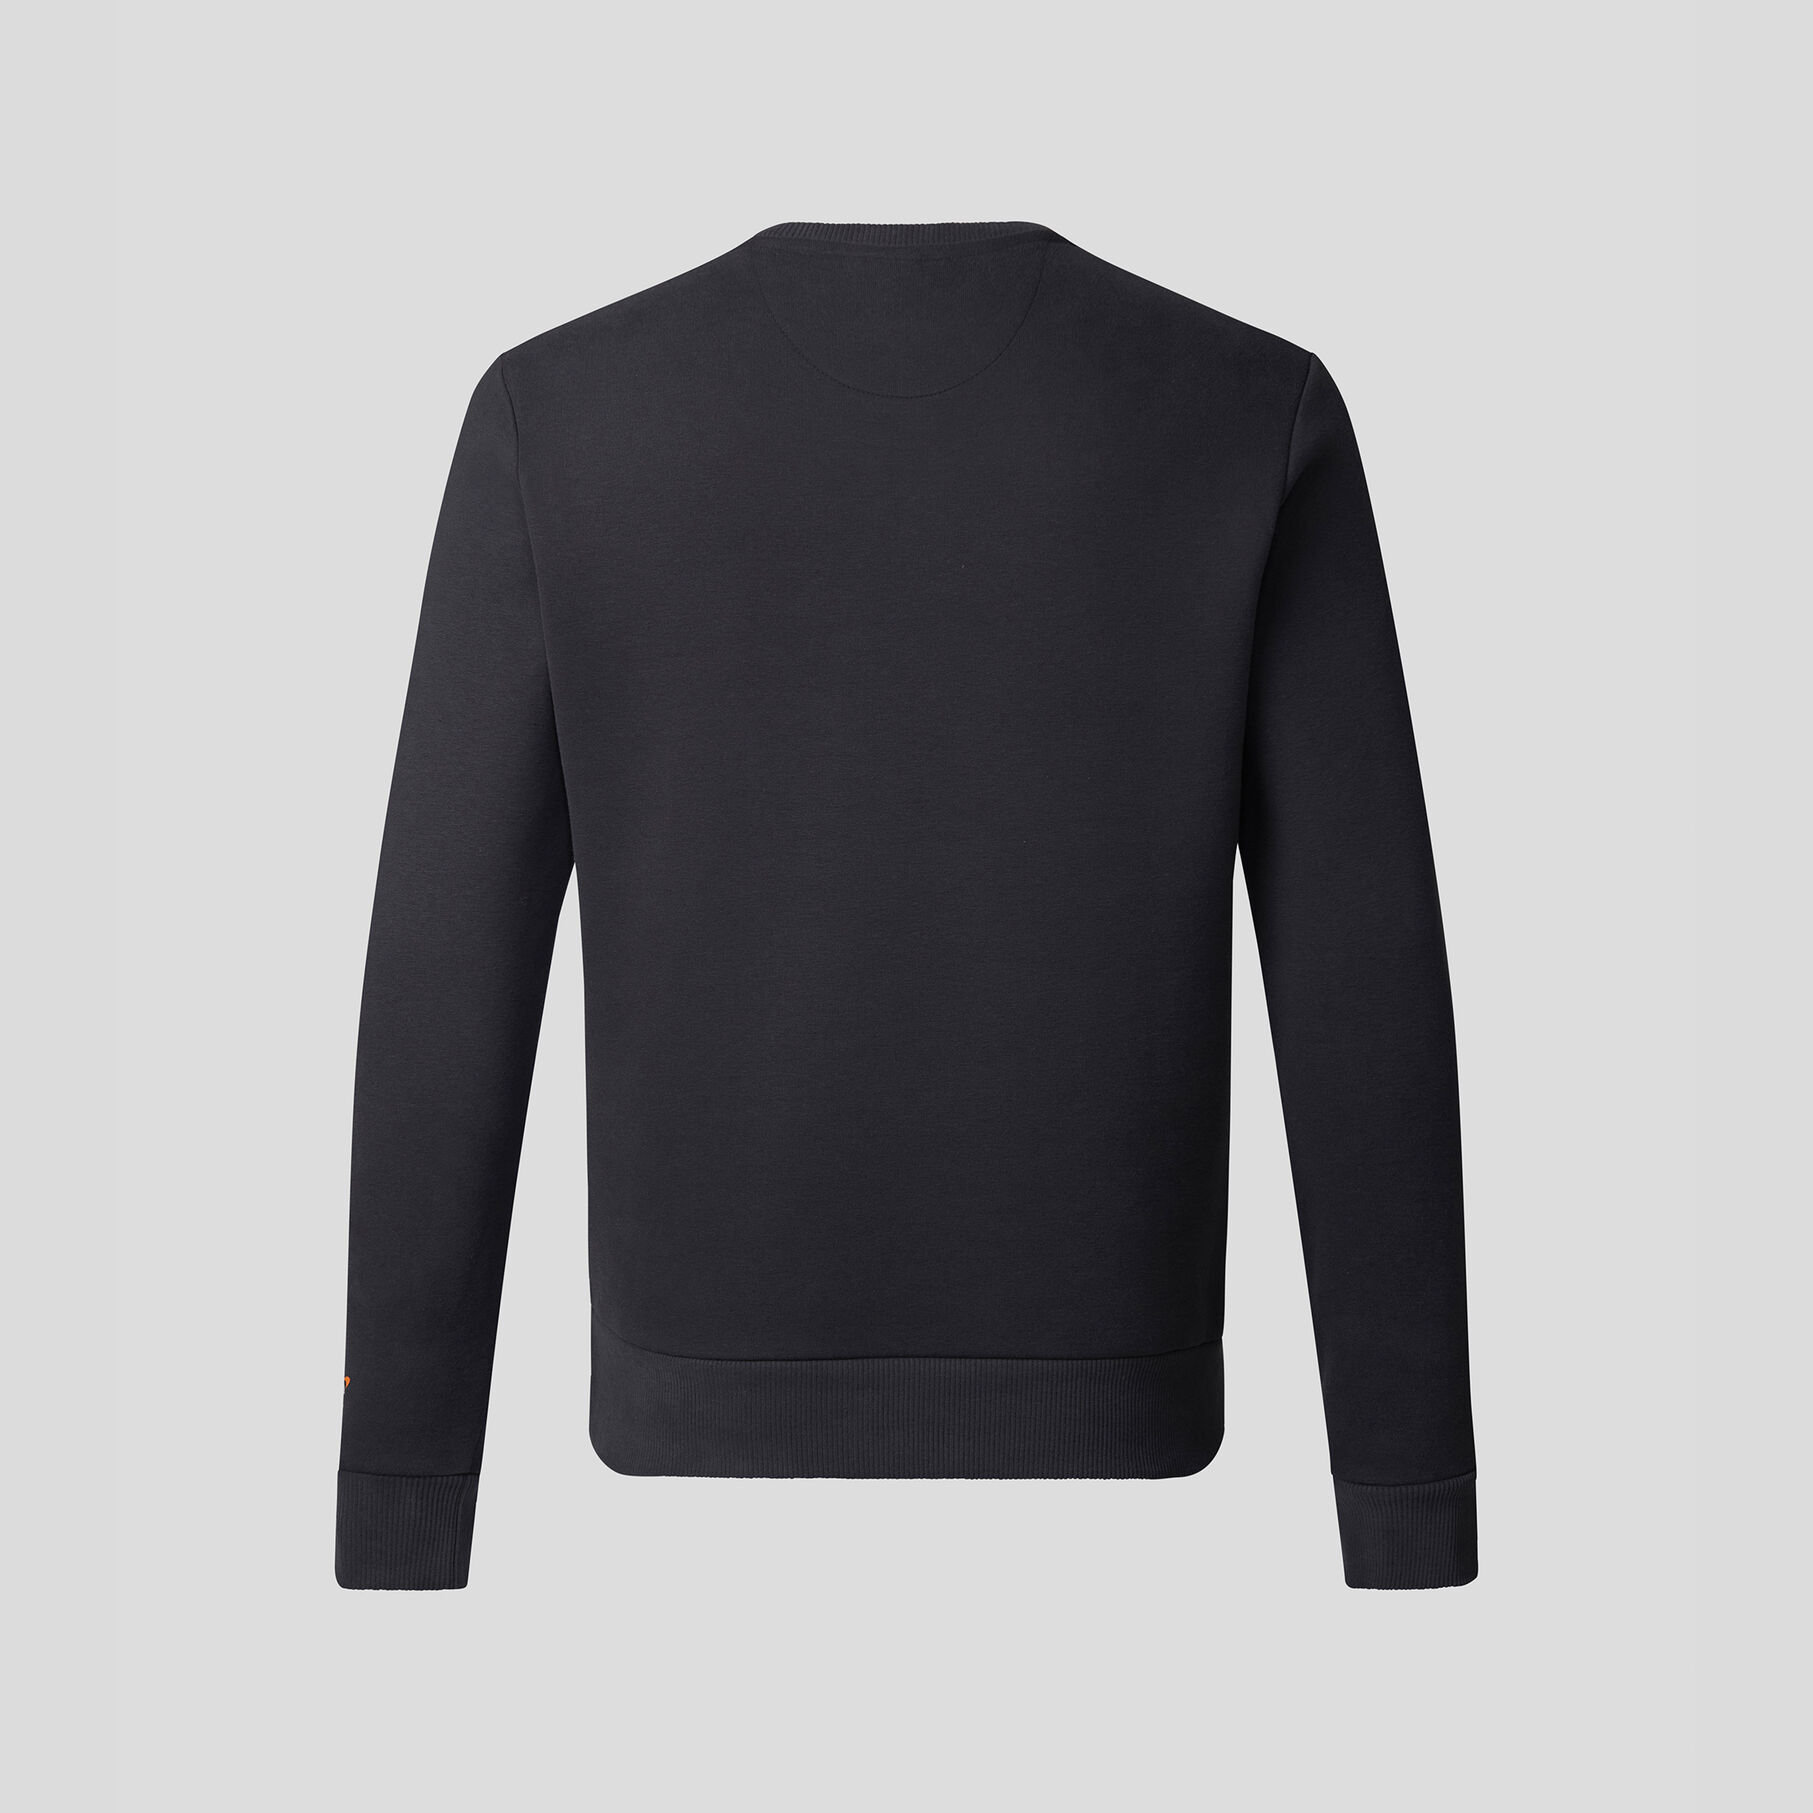 Dynamic Graphic Sweatshirt - McLaren F1 | Fuel For Fans